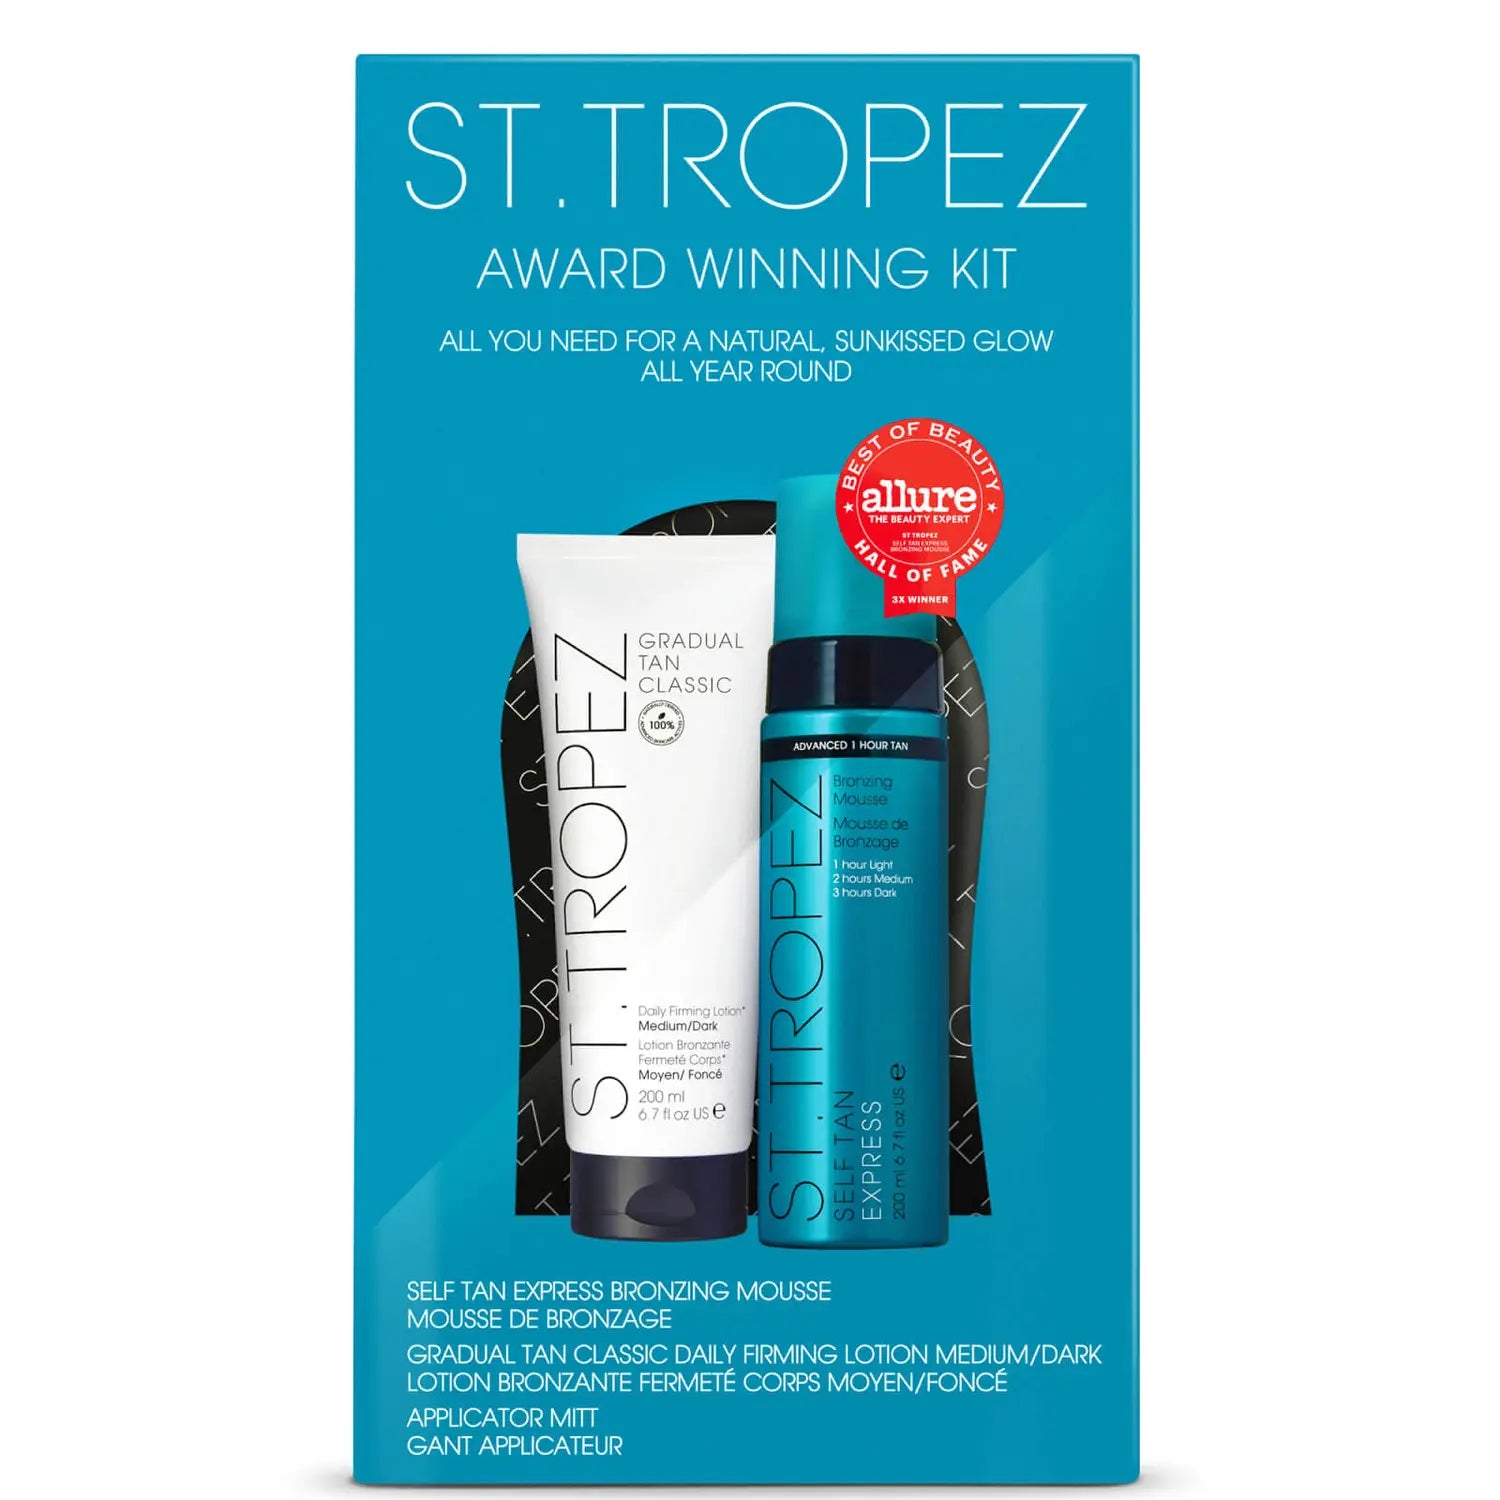 ST Tropez Tanning Kit Image